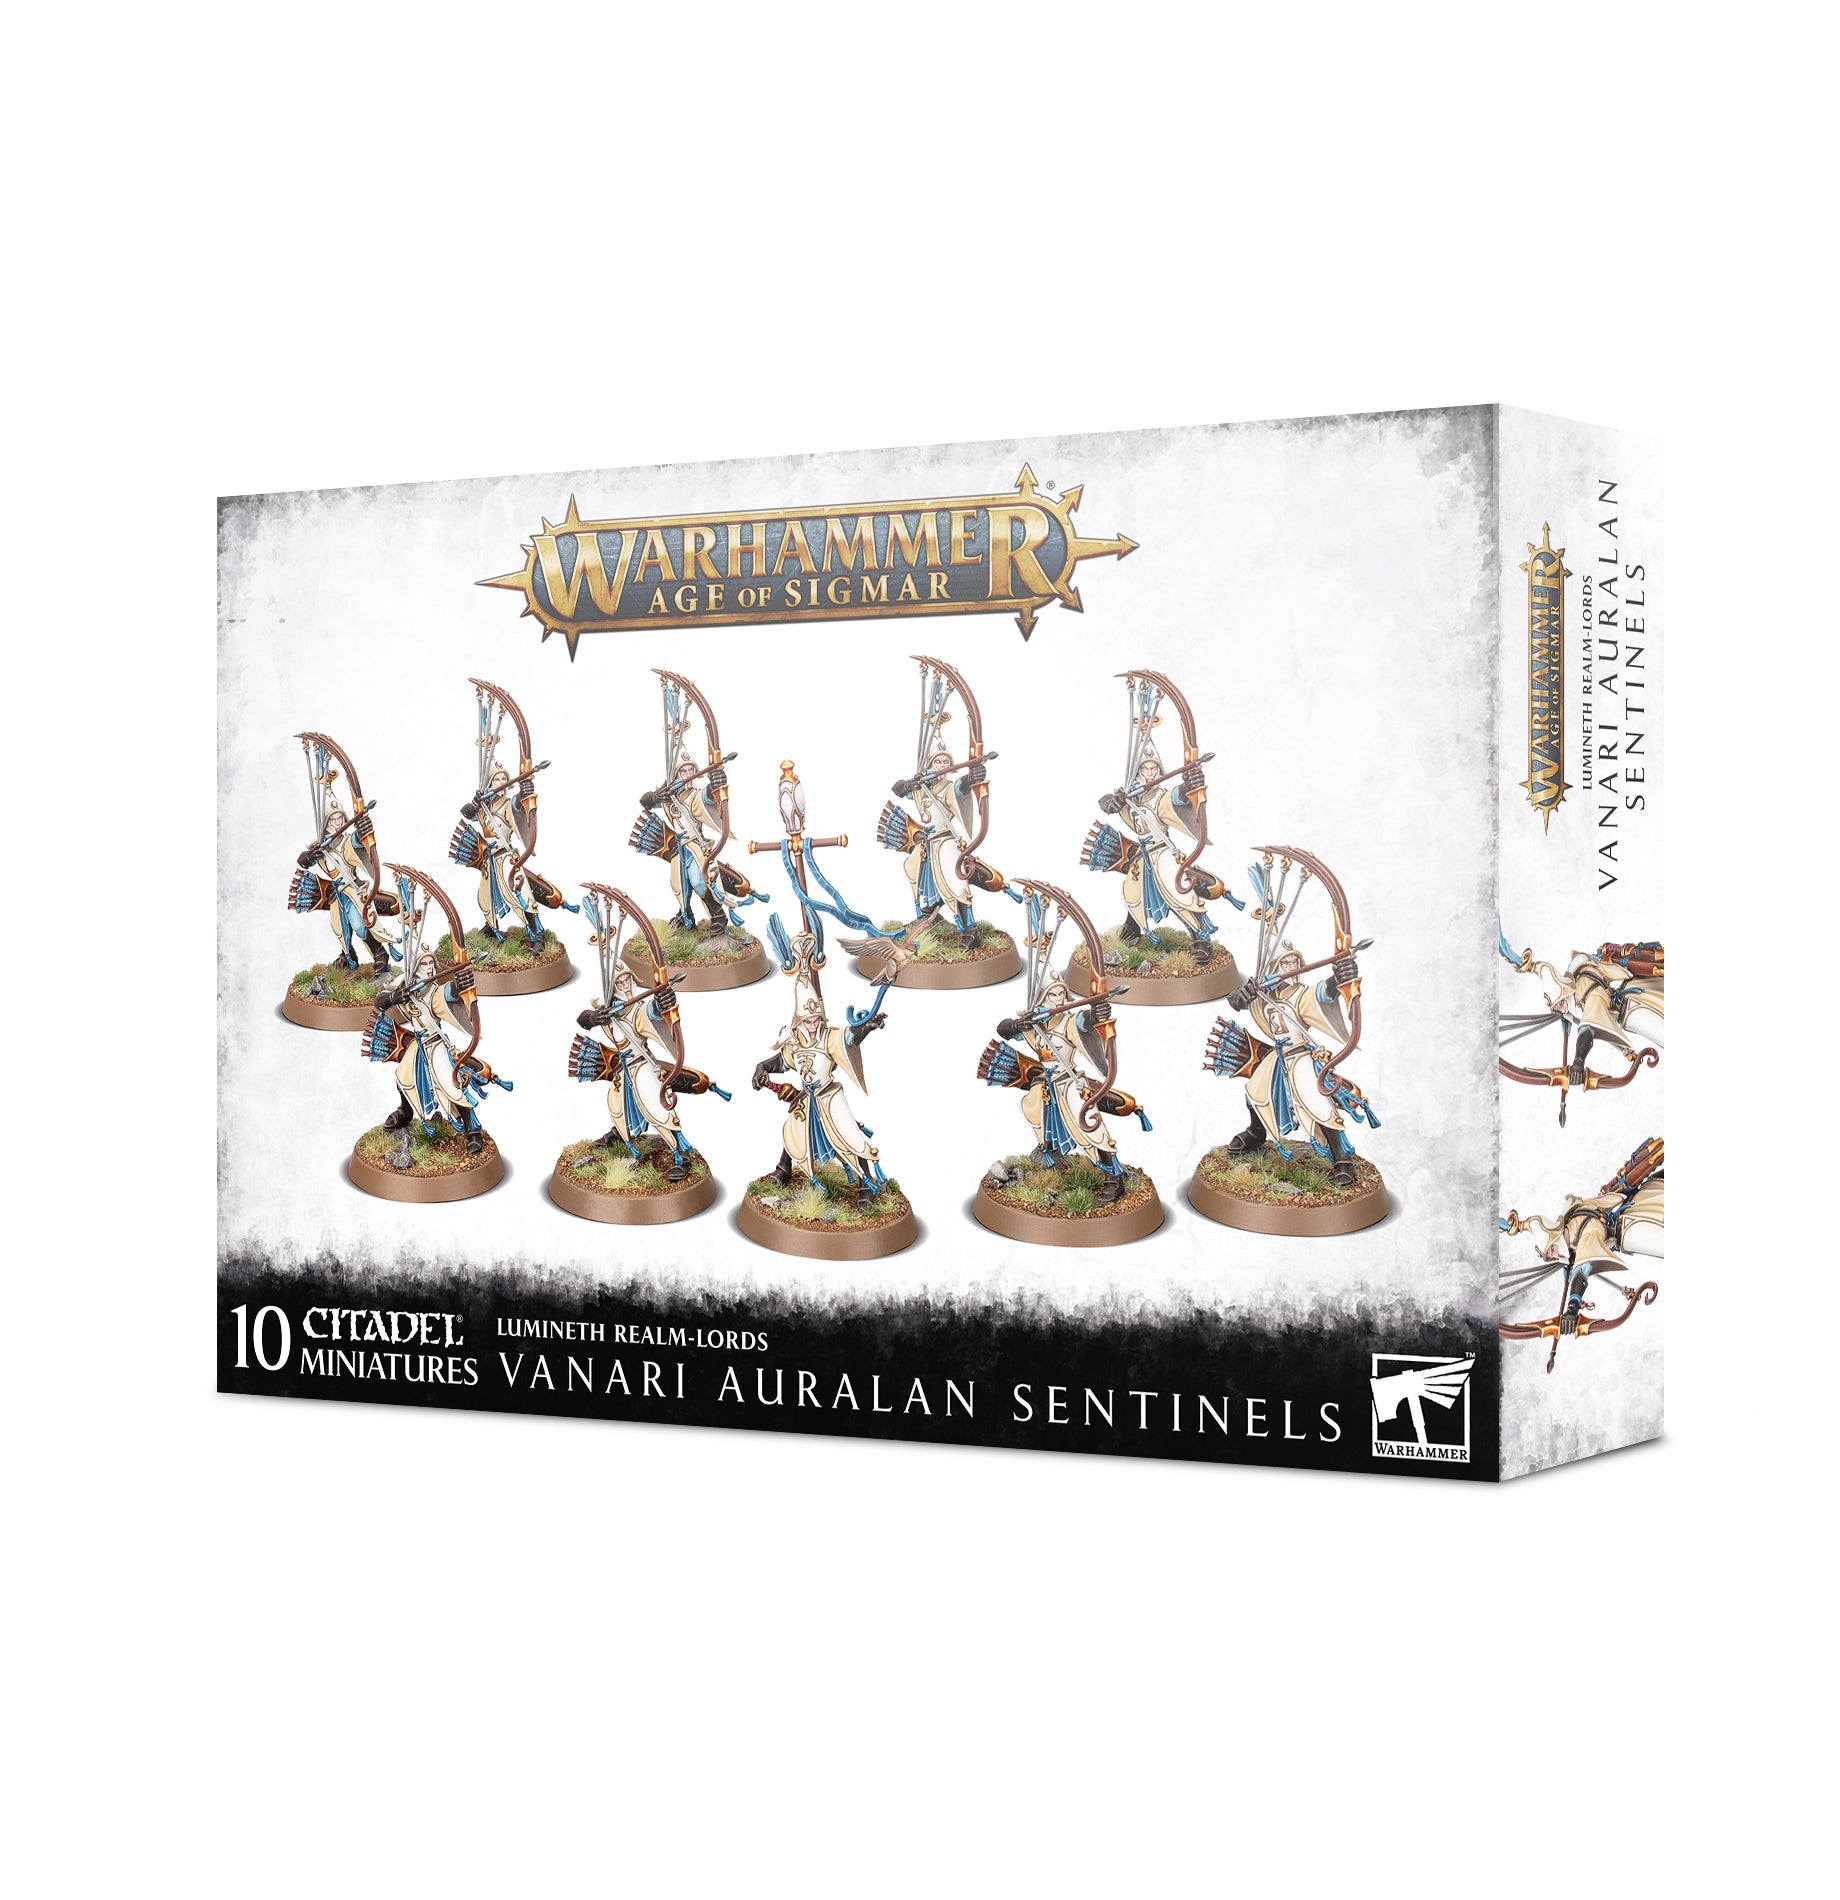 Warhammer Age of Sigmar: Lumineth Realm-Lords: Vanari Auralan Sentinels | All About Games